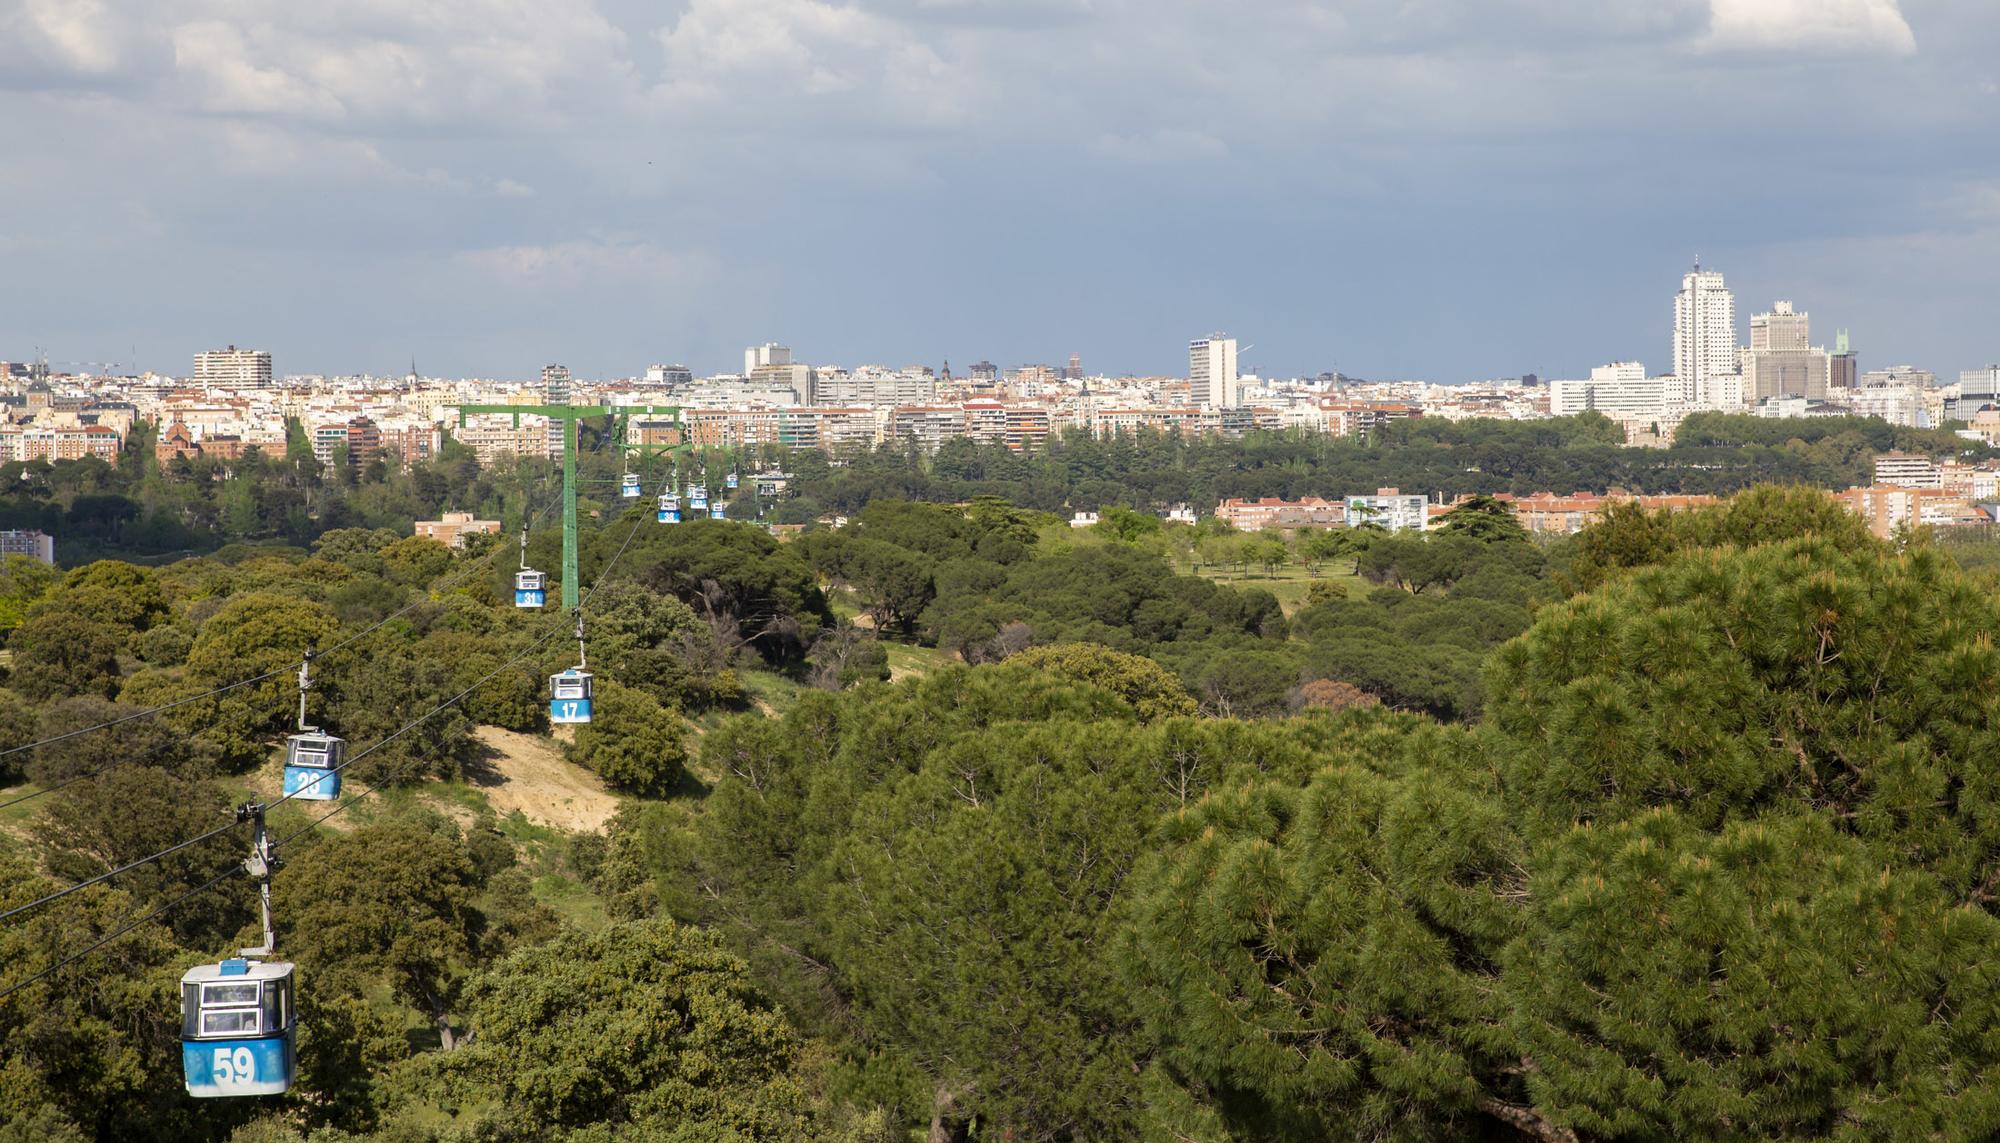 Teleferico de Madrid panoramica